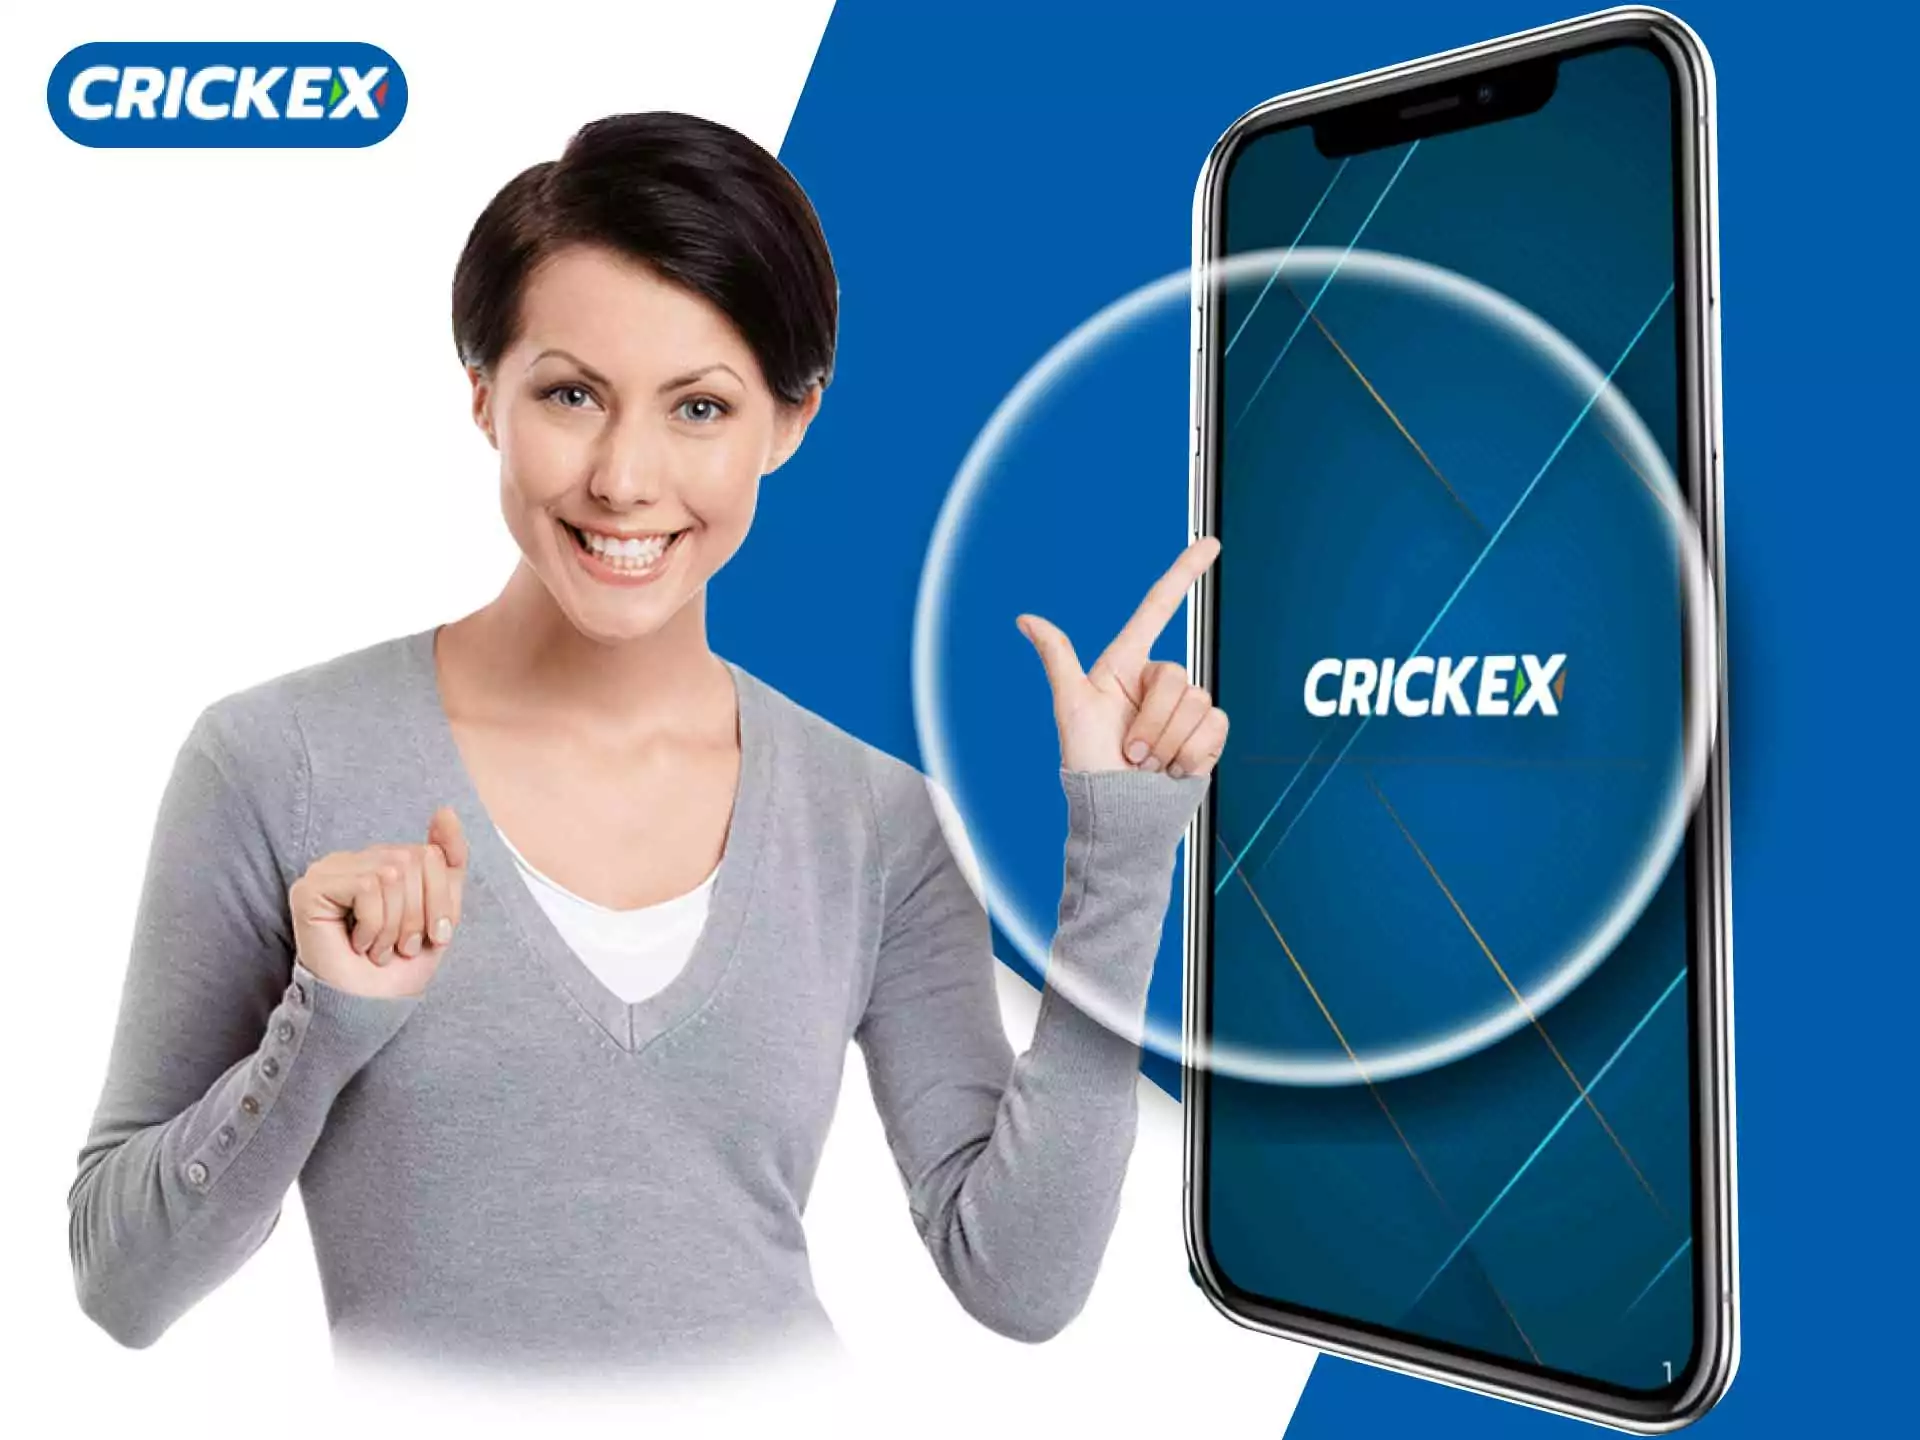 Crickex has a user-friendly and convenient app.